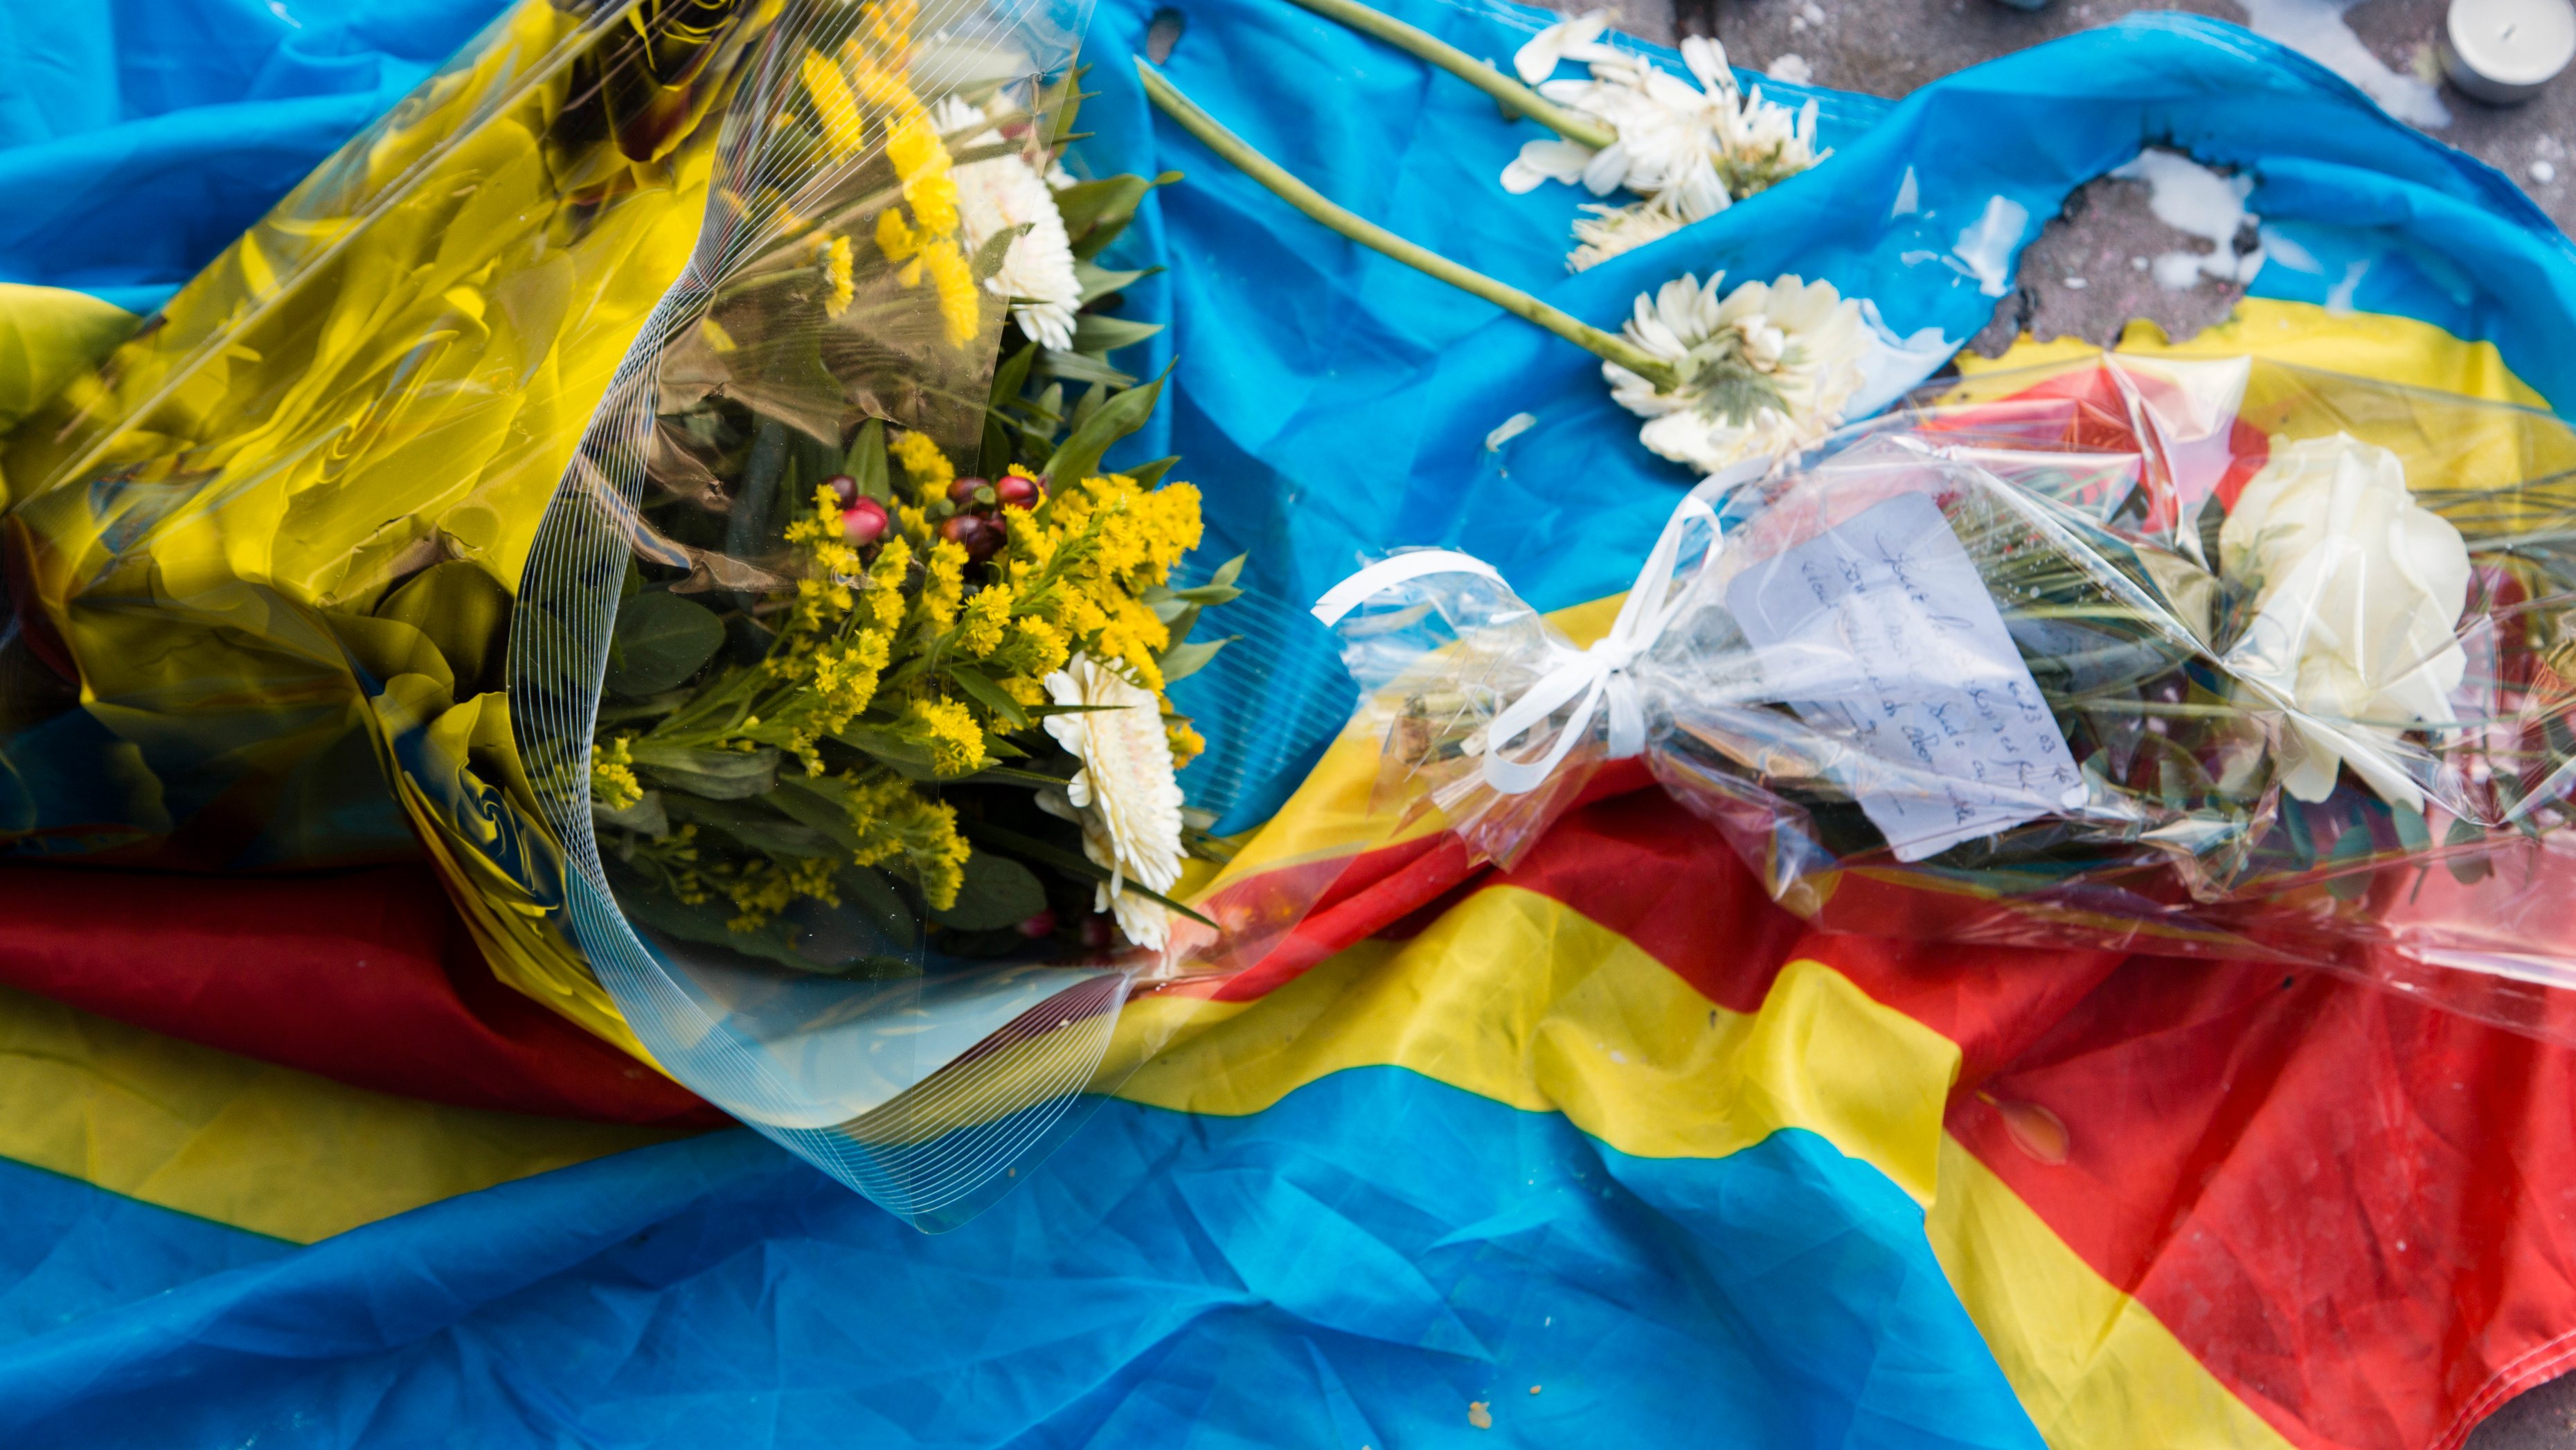 Belgium - Terror Attack Aftermath in Brussels